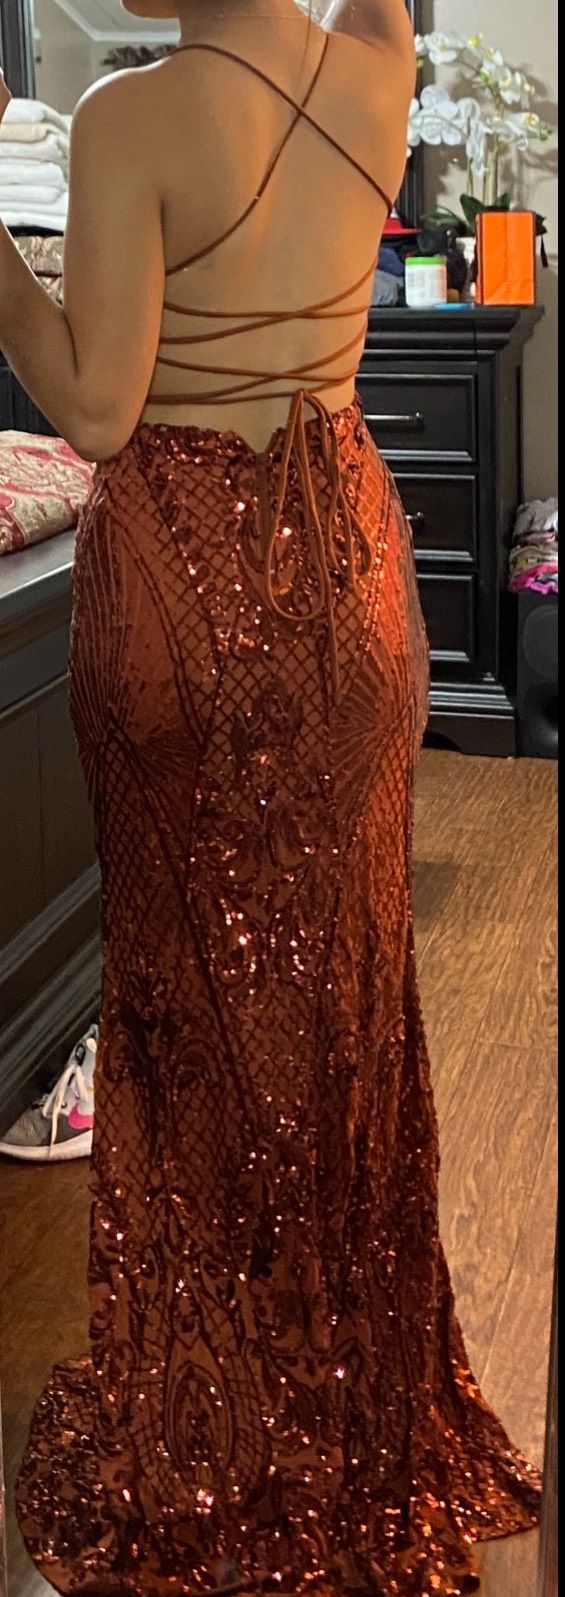 Windsor Size S Prom Brown Side Slit Dress on Queenly